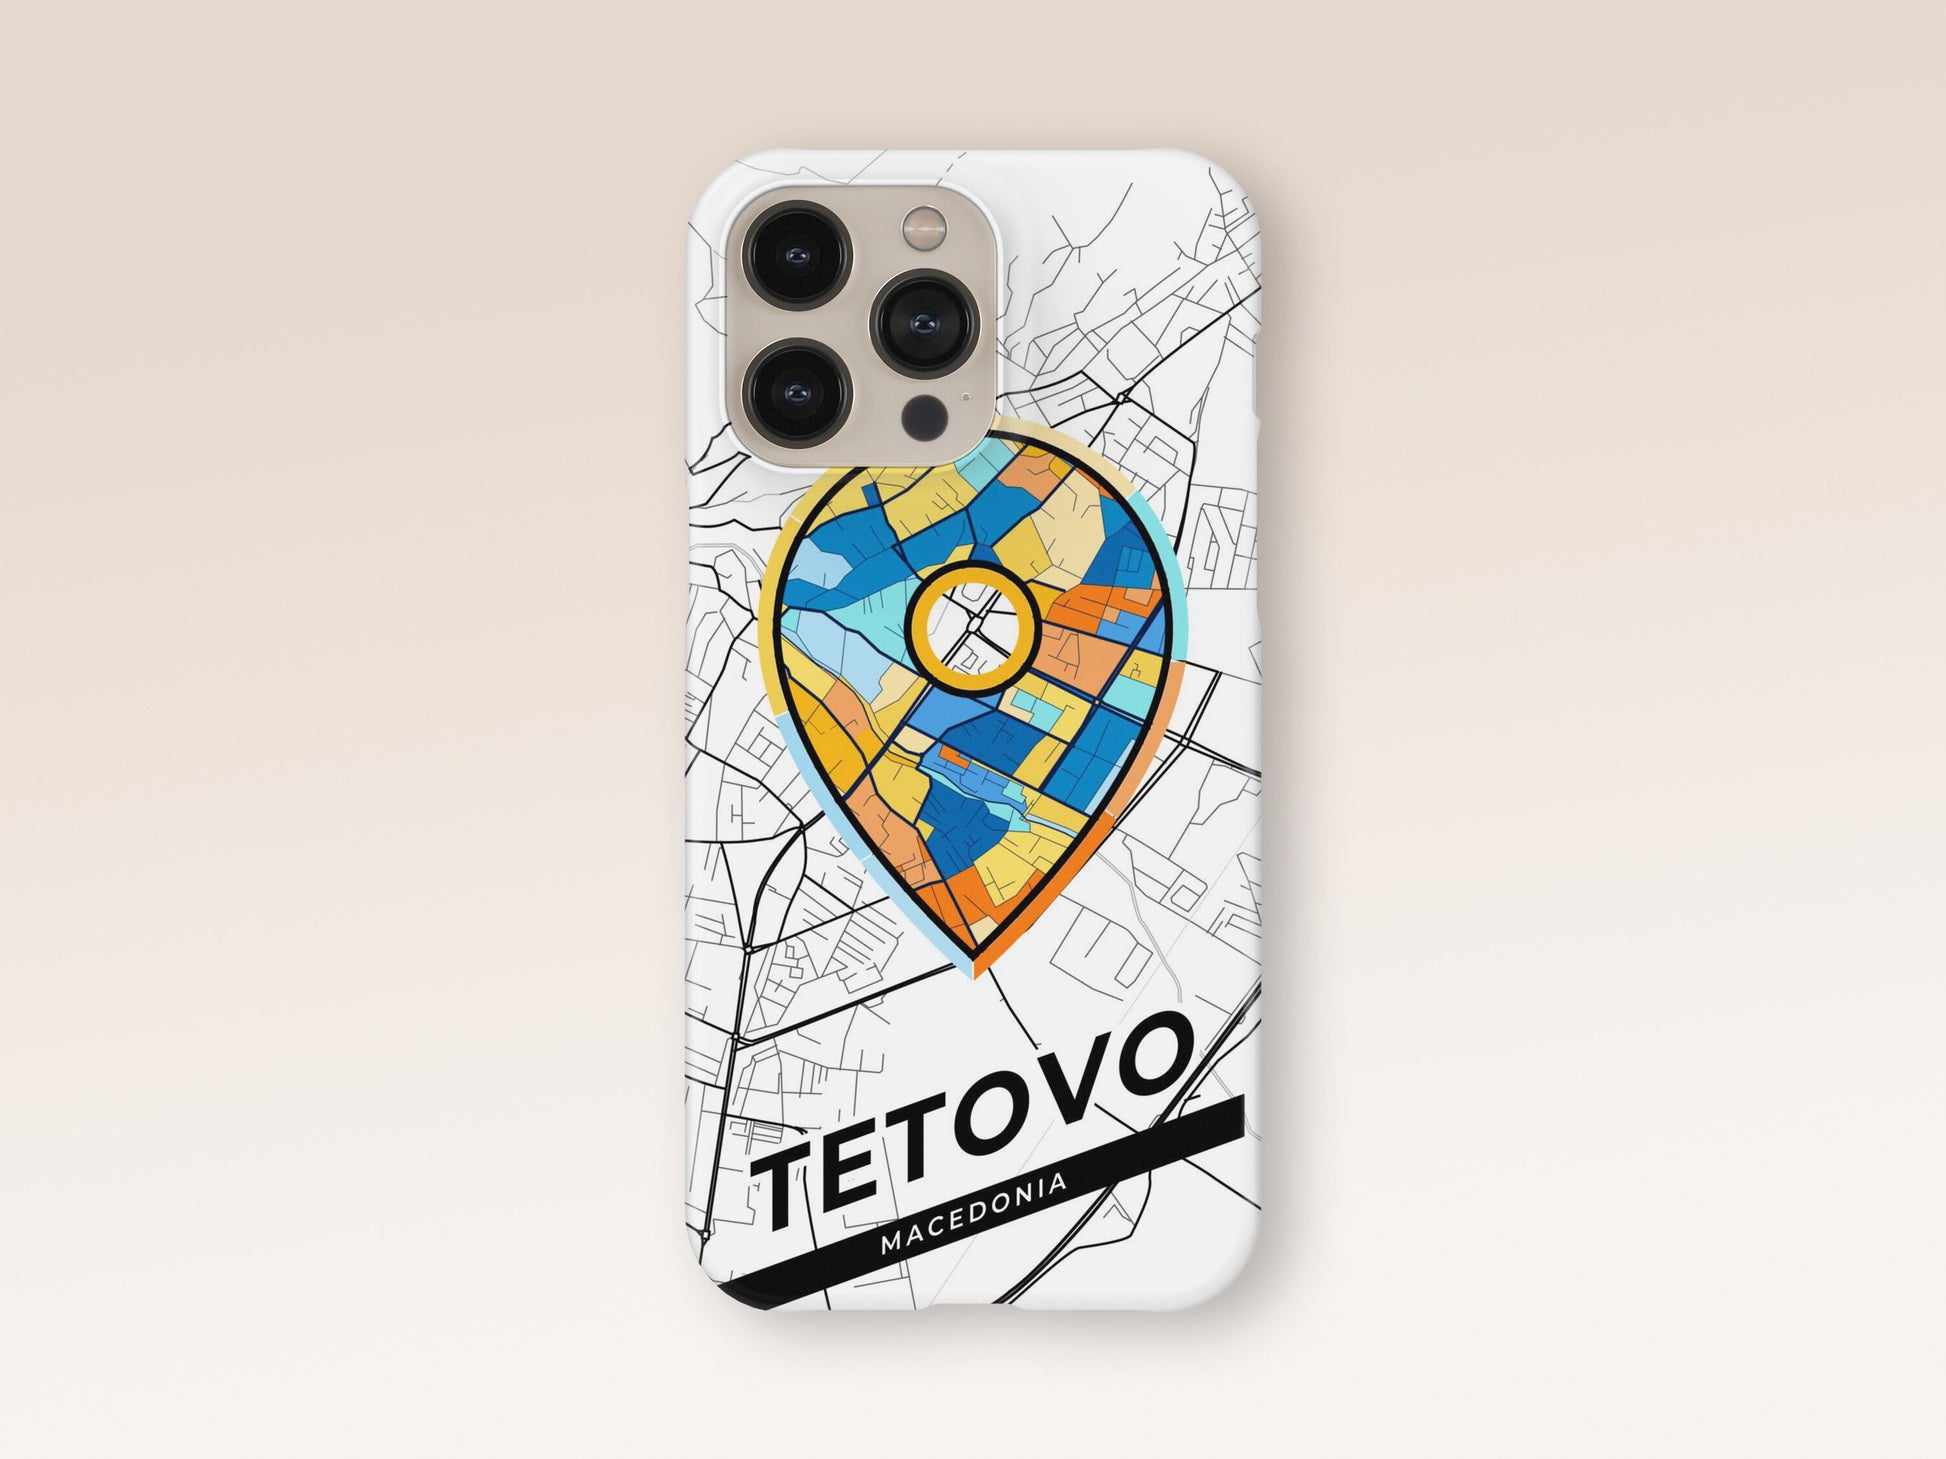 Tetovo North Macedonia slim phone case with colorful icon 1